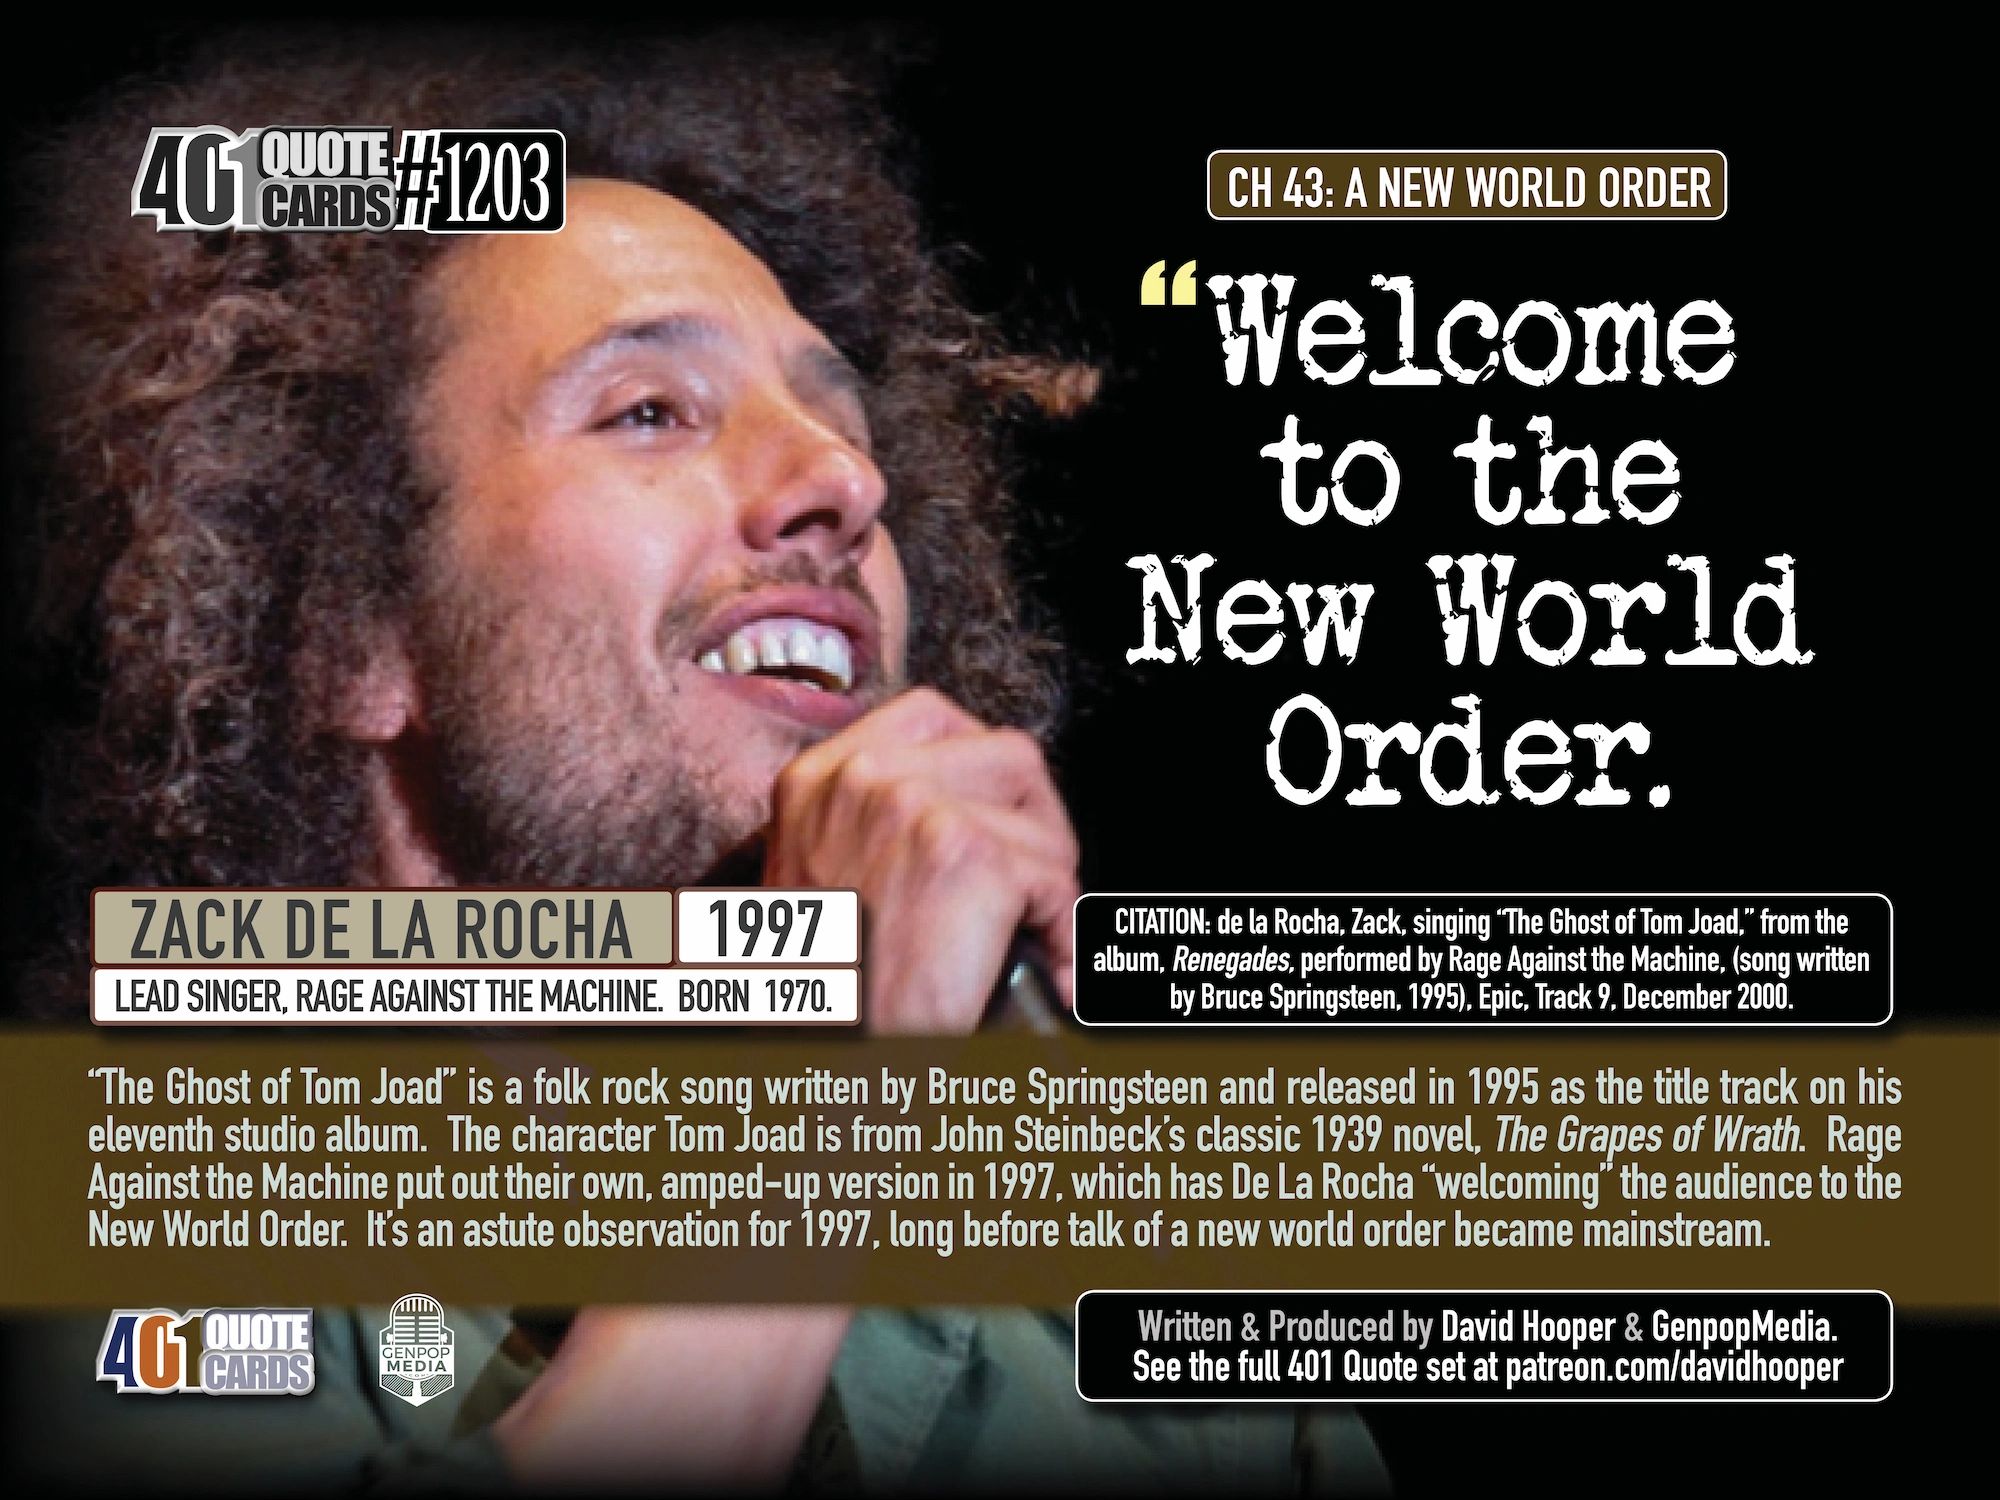 Rage Against the Machine frontman, Zack de la Rocha Quote: "Welcome to the New World Order."